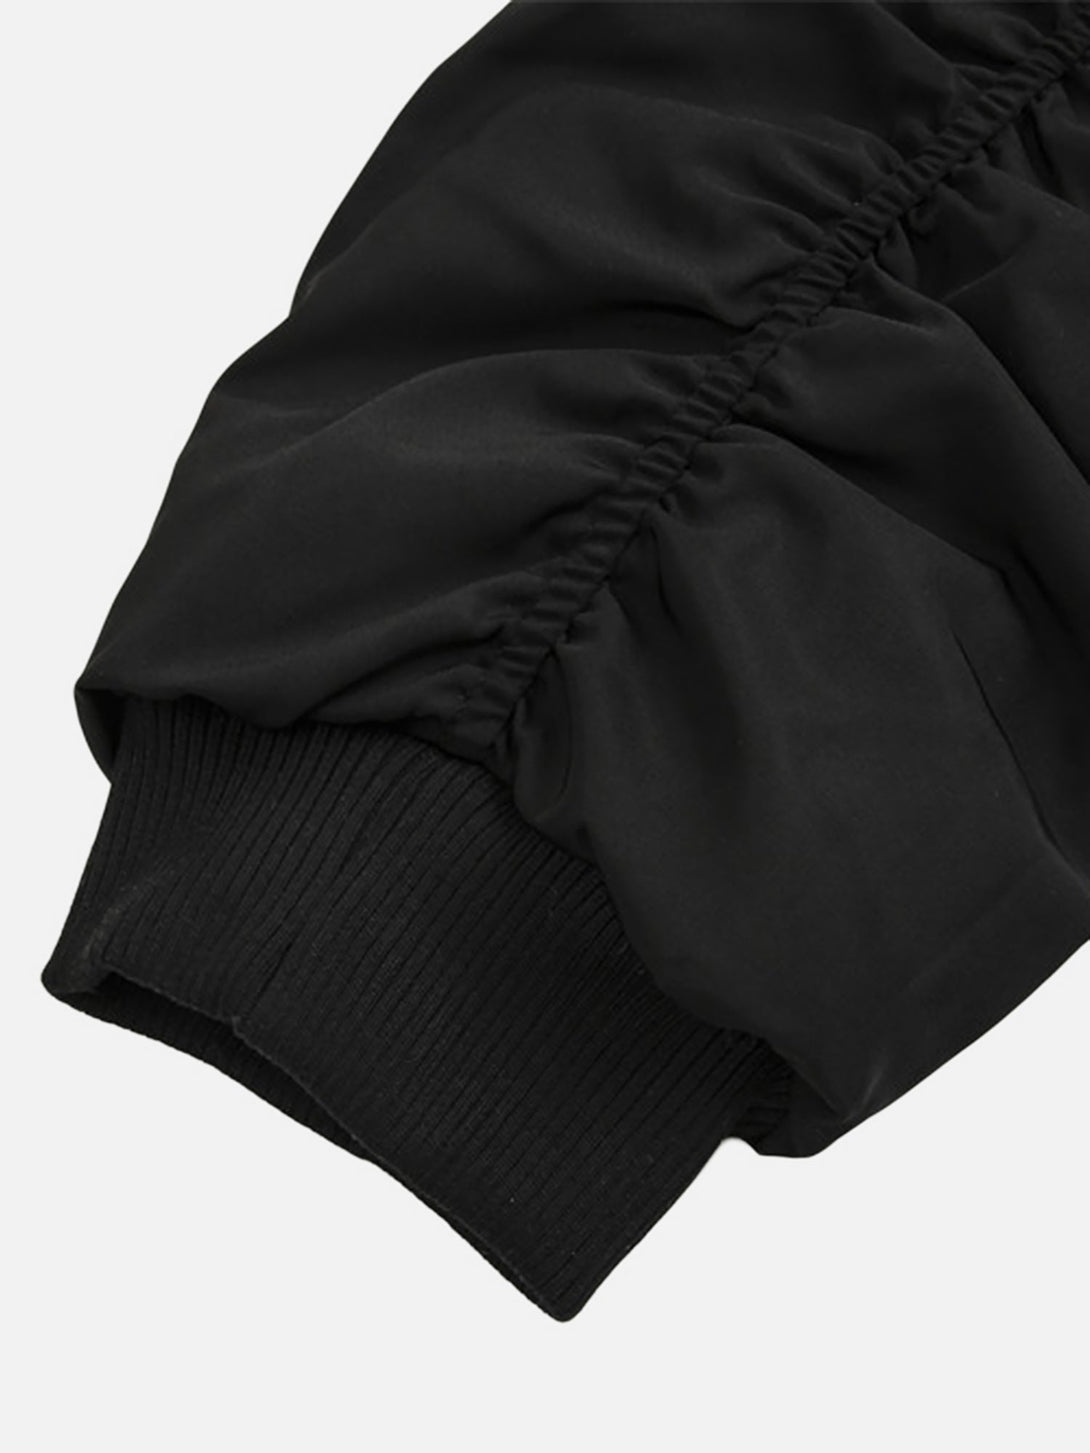 Majesda® - Dark Baseball Jacket- Outfit Ideas - Streetwear Fashion - majesda.com